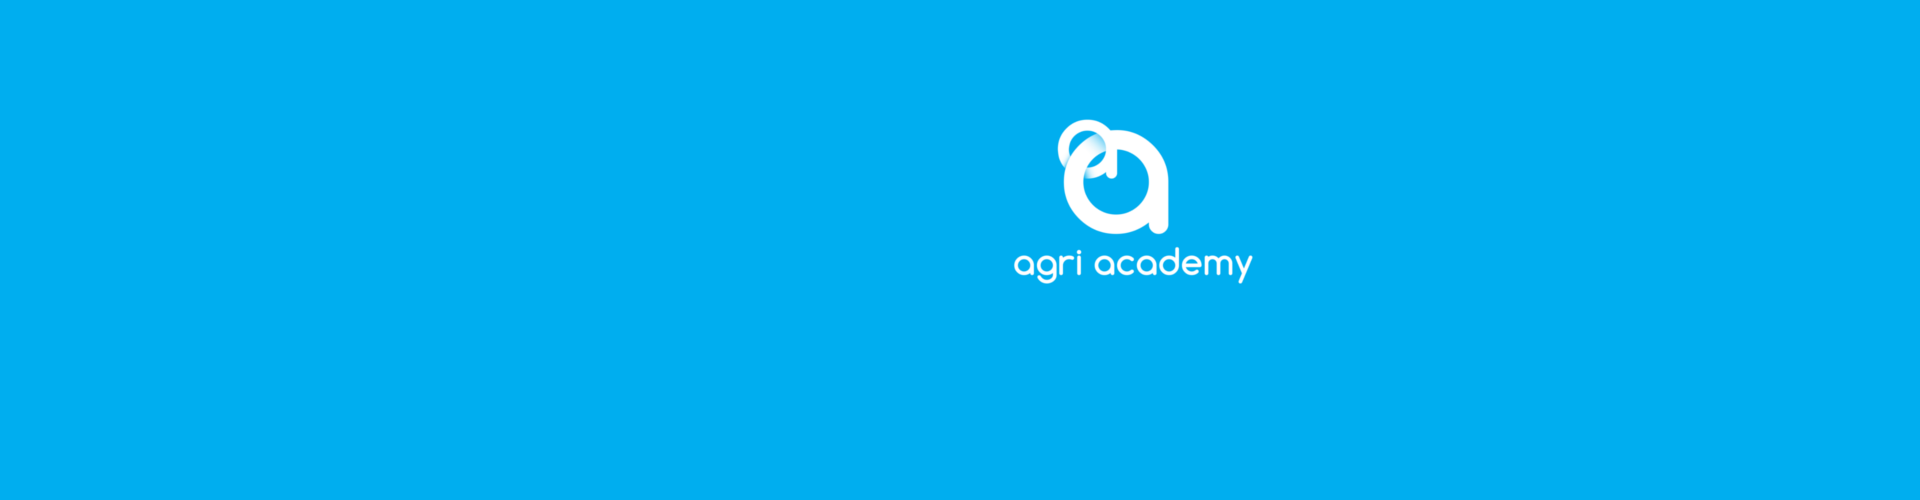 Banner_voerexpert_agri_academy